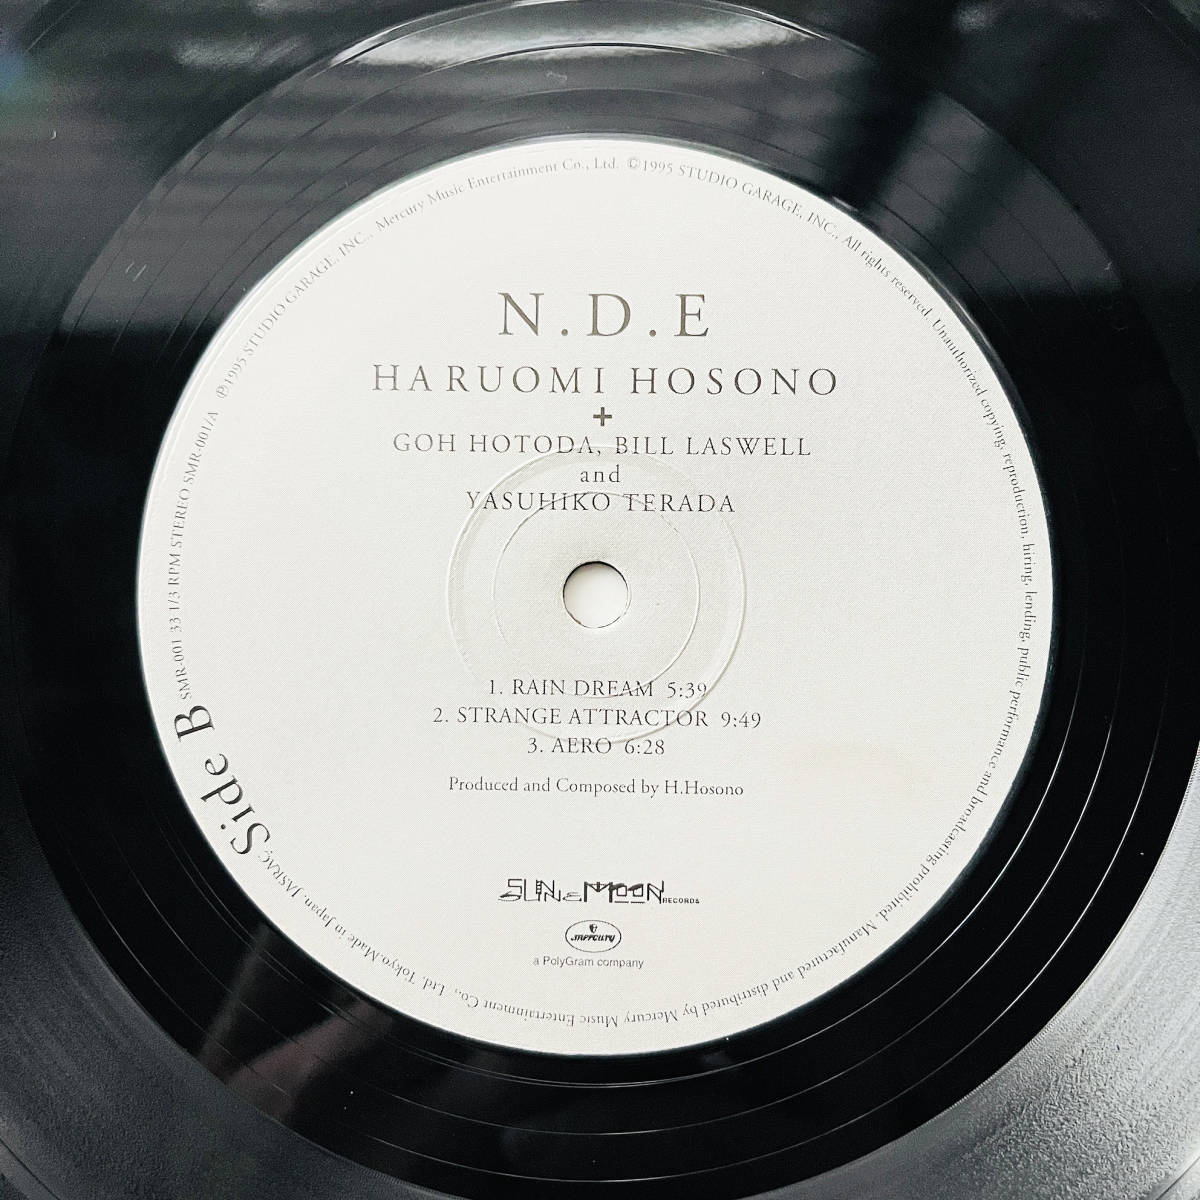  редкий редкость 12 дюймовый запись ( Hosono Haruomi - N. D. E )Haruomi Hosono N.D.E go * ho todaru*laz well Terada ../YMO Sakamoto Ryuichi Takahashi Yukihiro 